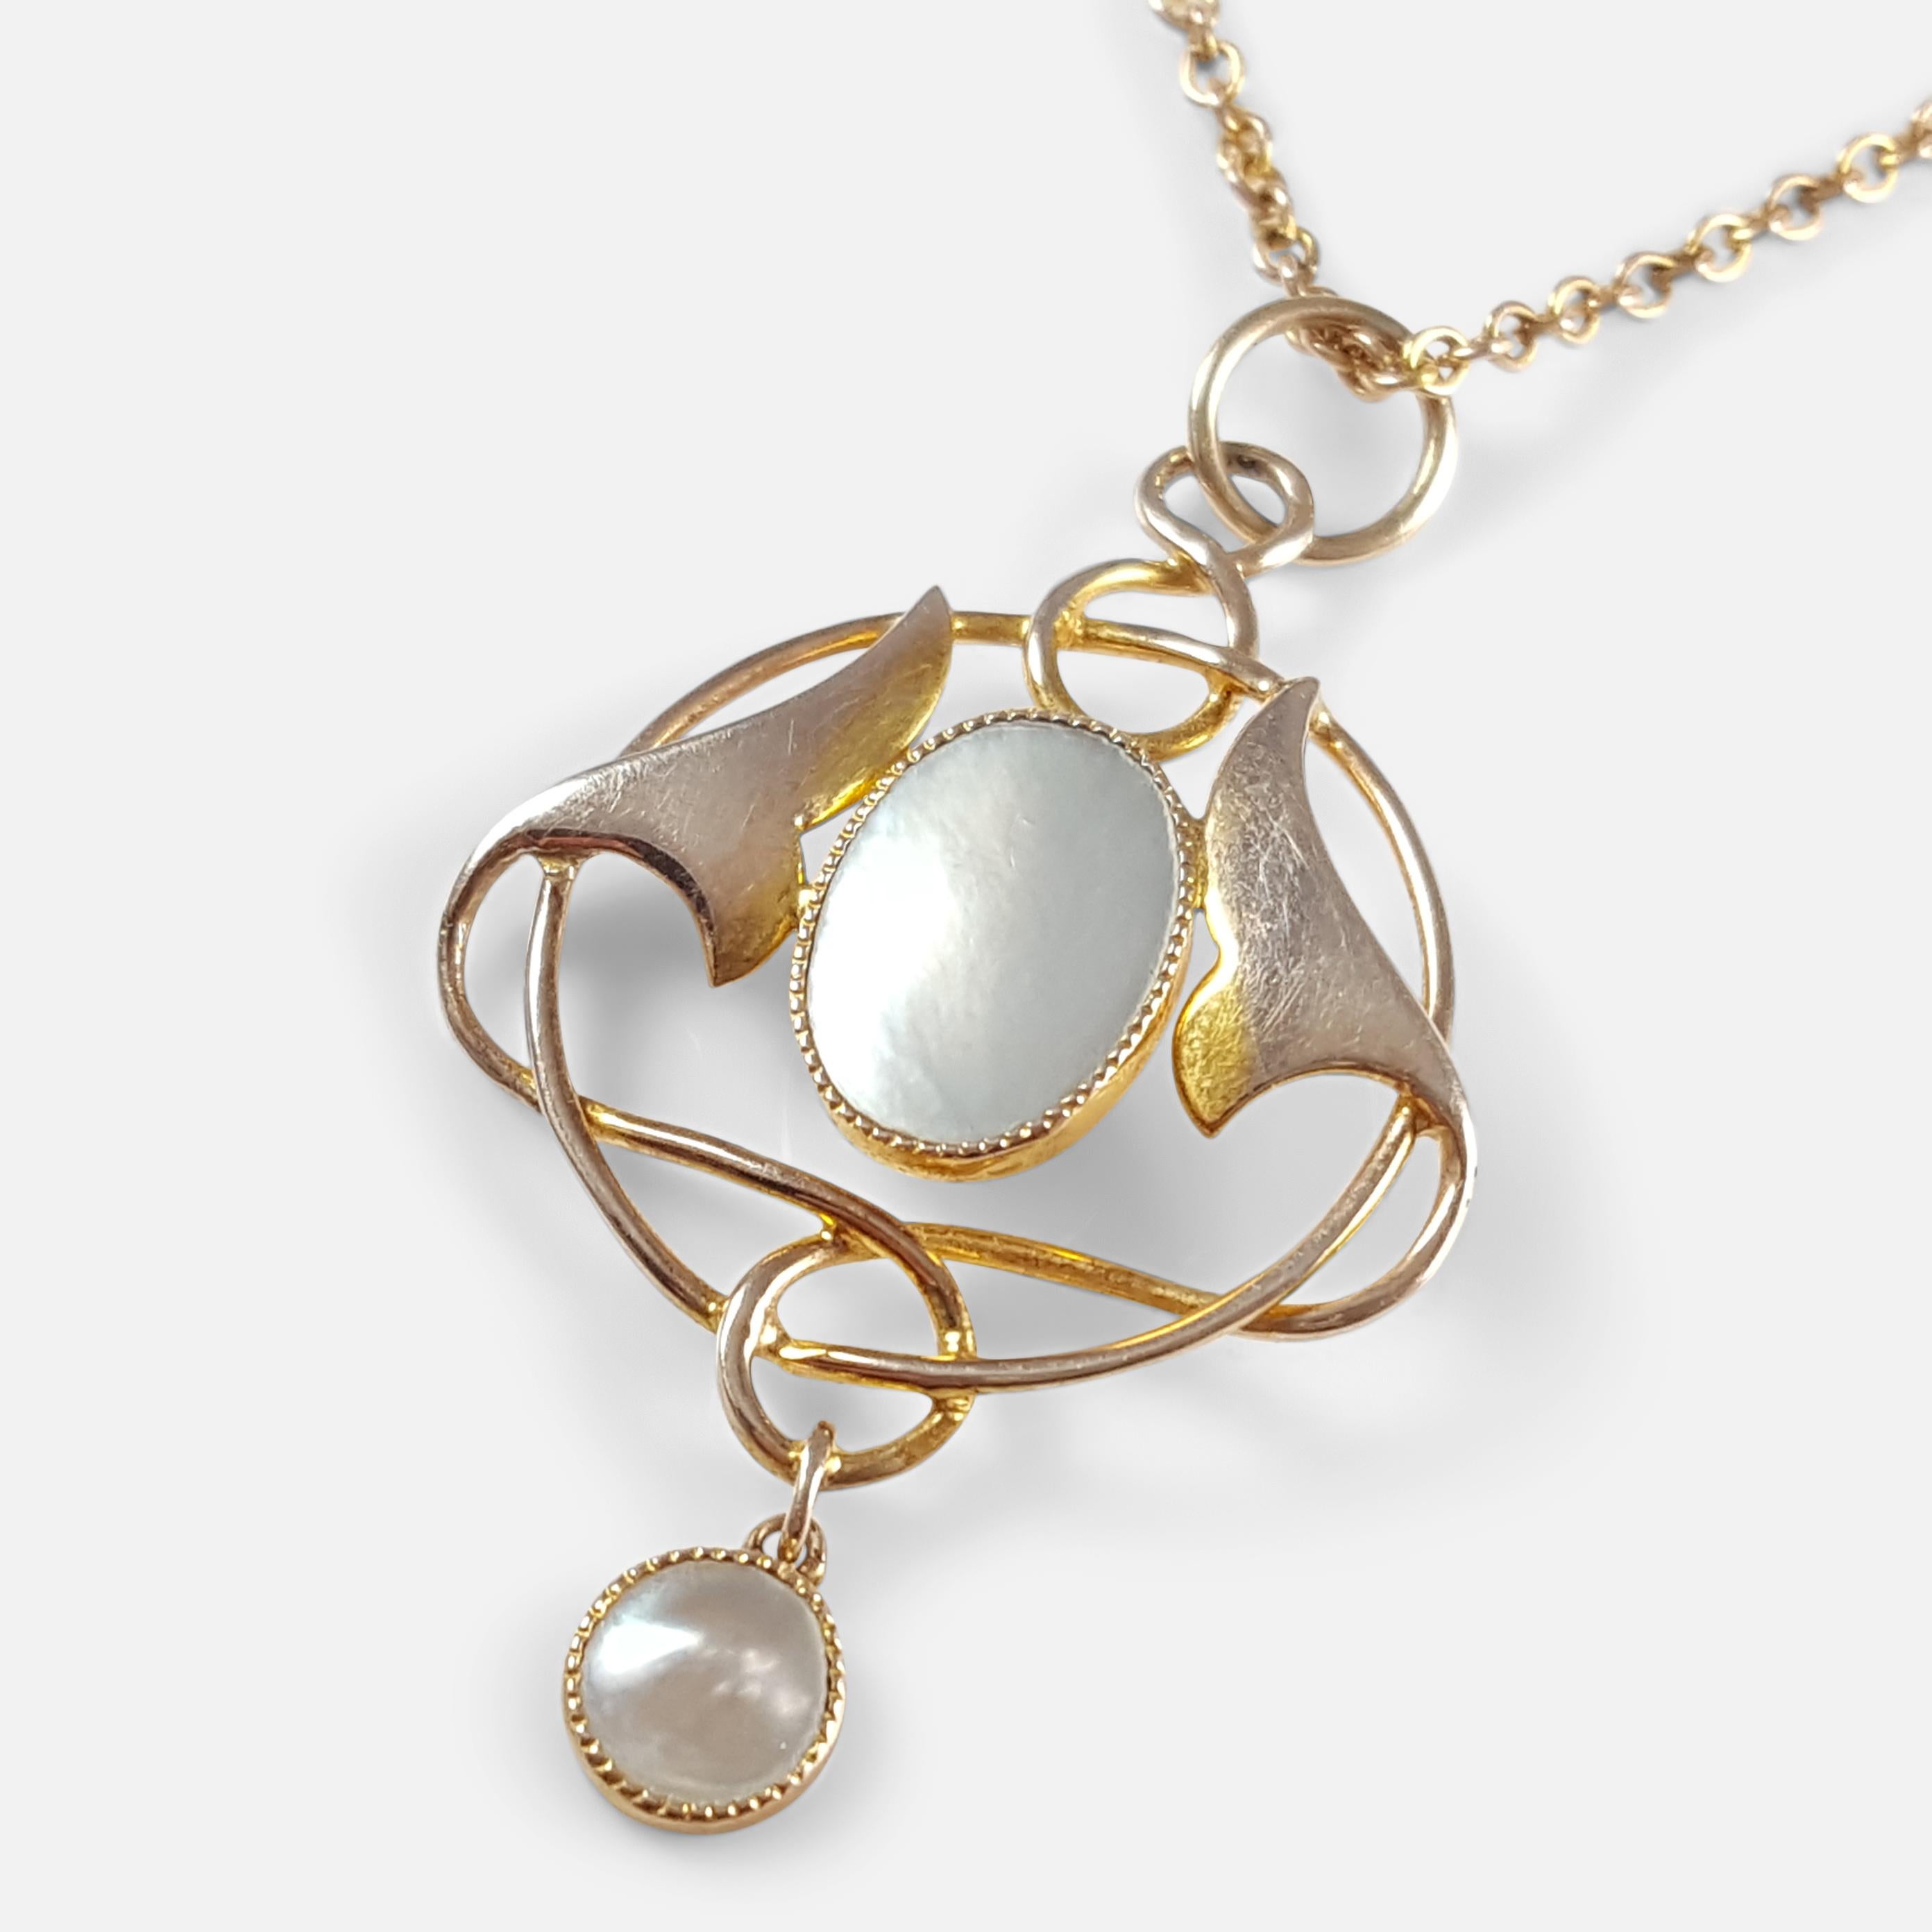 Description: - This is a fine antique Art Nouveau Murrle Bennett & Co Celtic Revival 9 karat yellow gold & blister pearl pendant, circa 1905. The pendant is designed in the celtic revival style. The two blister pearls are in good condition. The